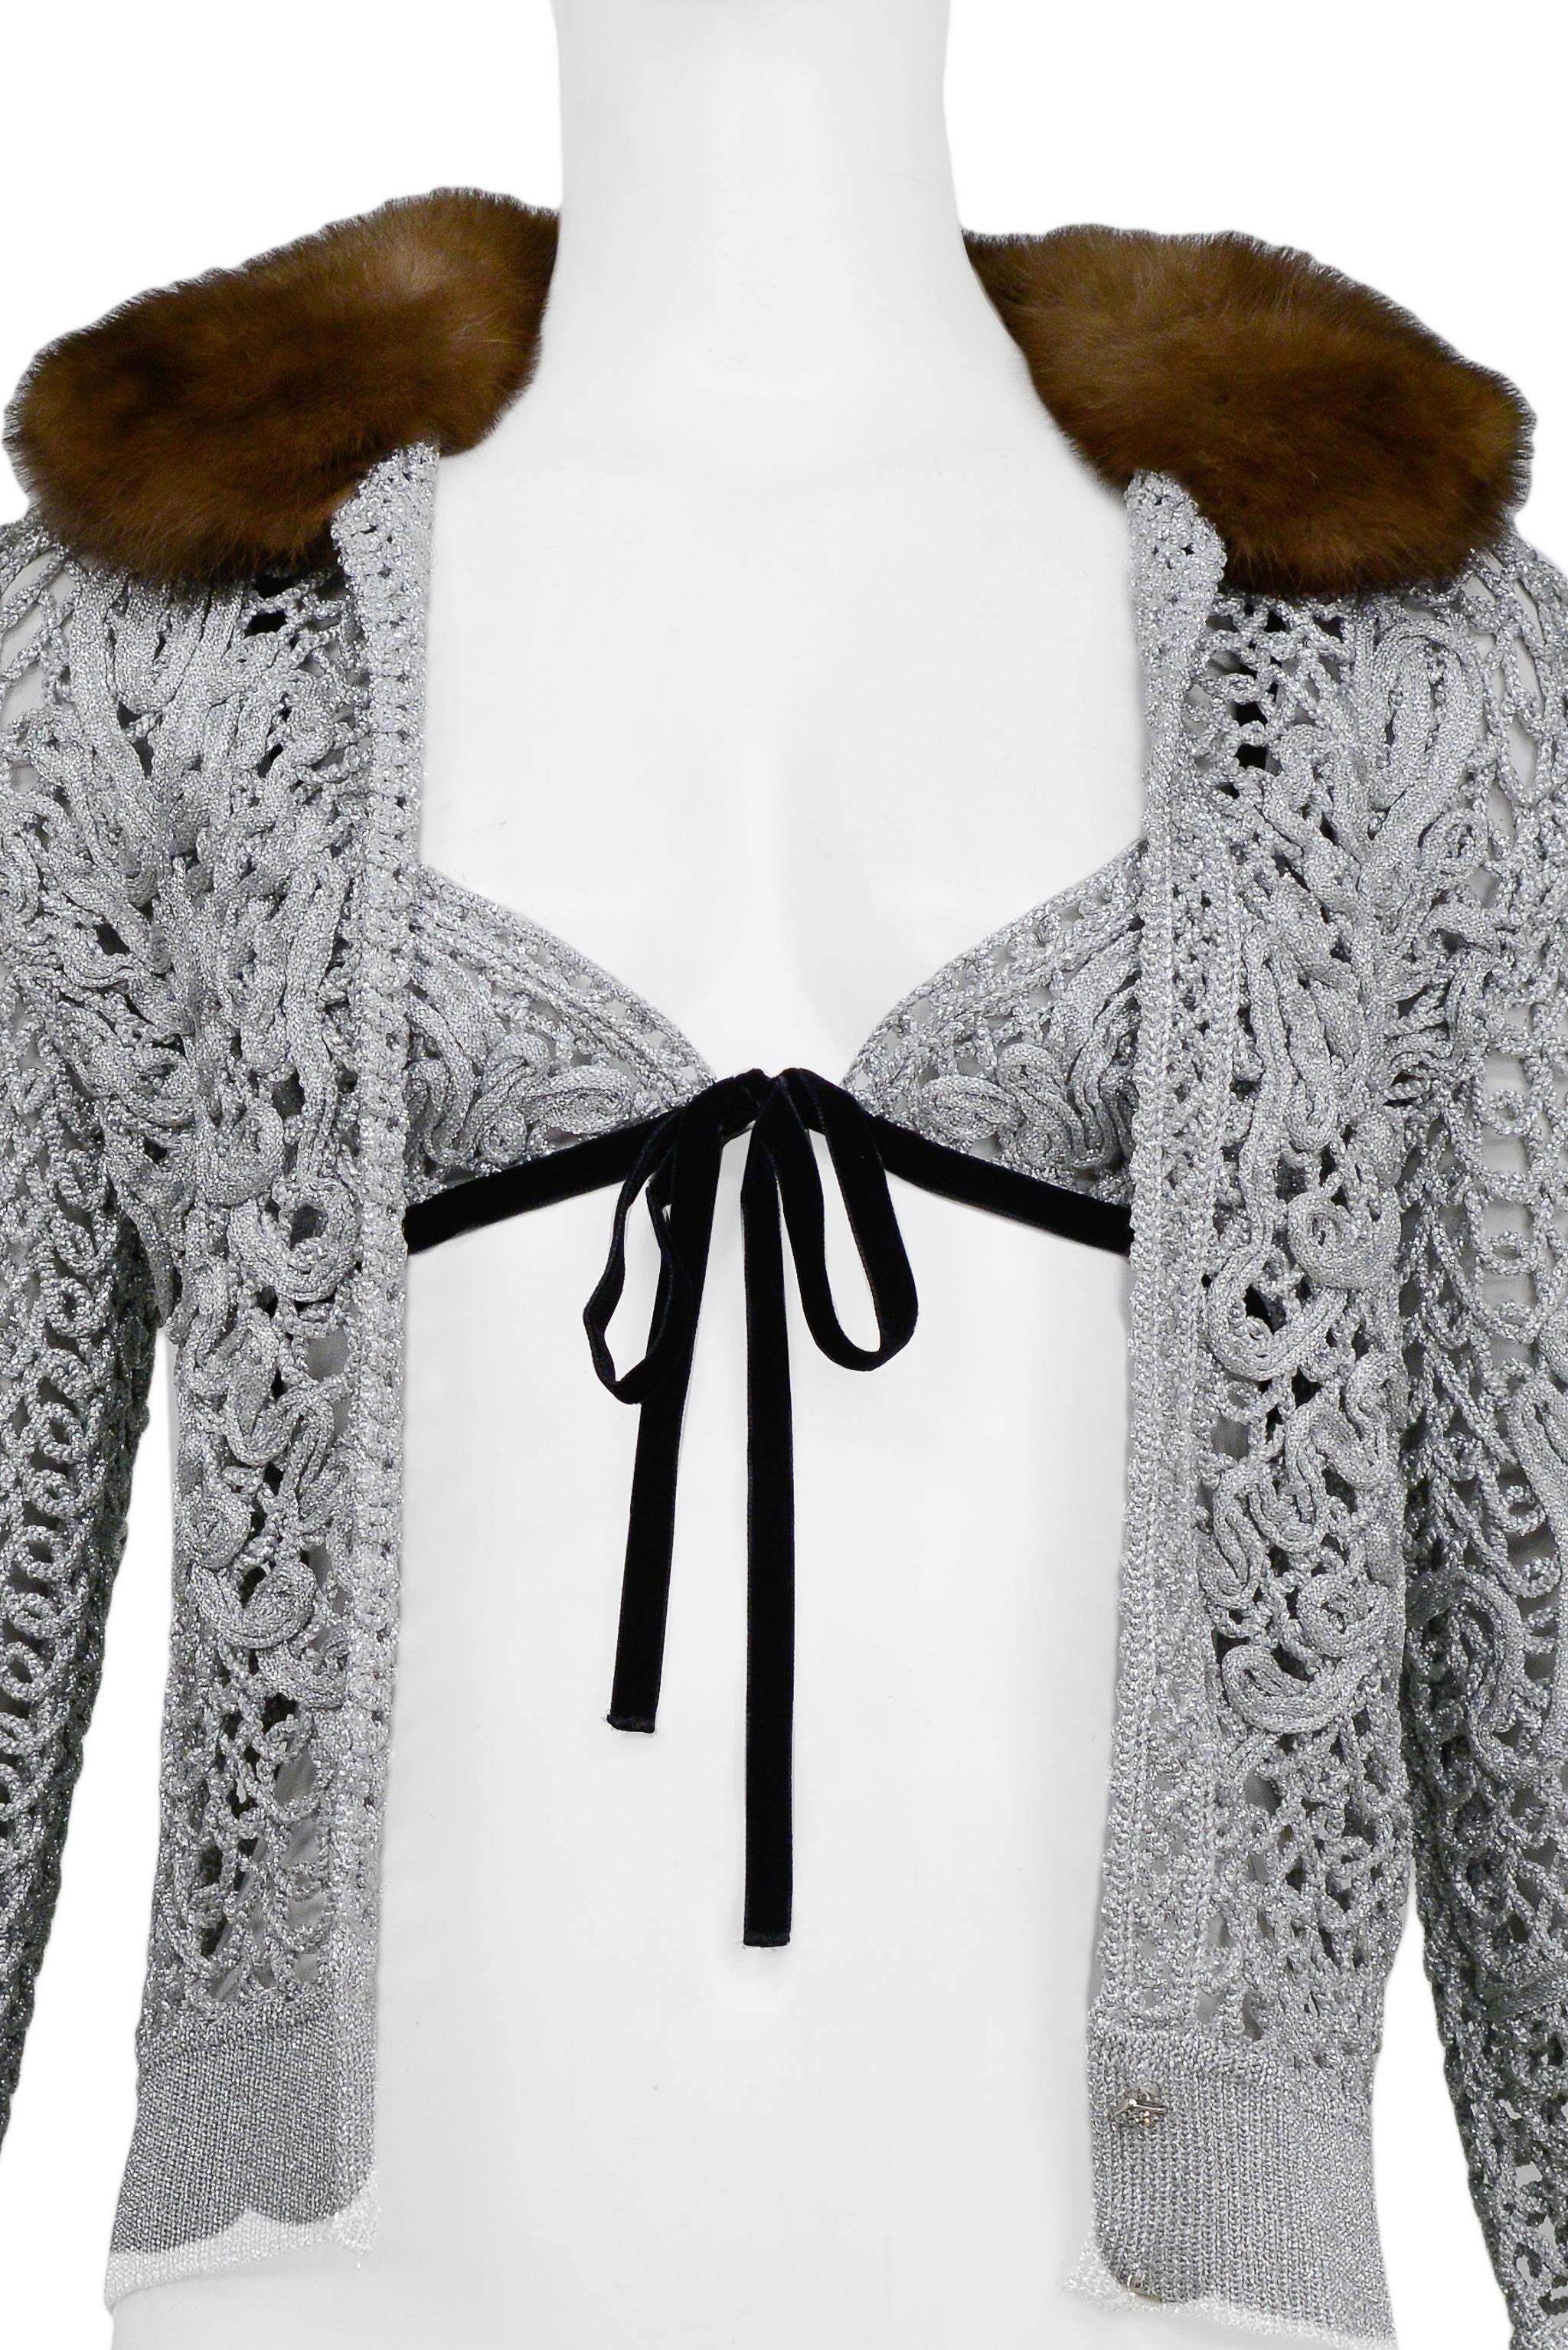 Valentino Silver Crochet Cardigan With Fur Collar & Bikini Top 2004 For Sale 1